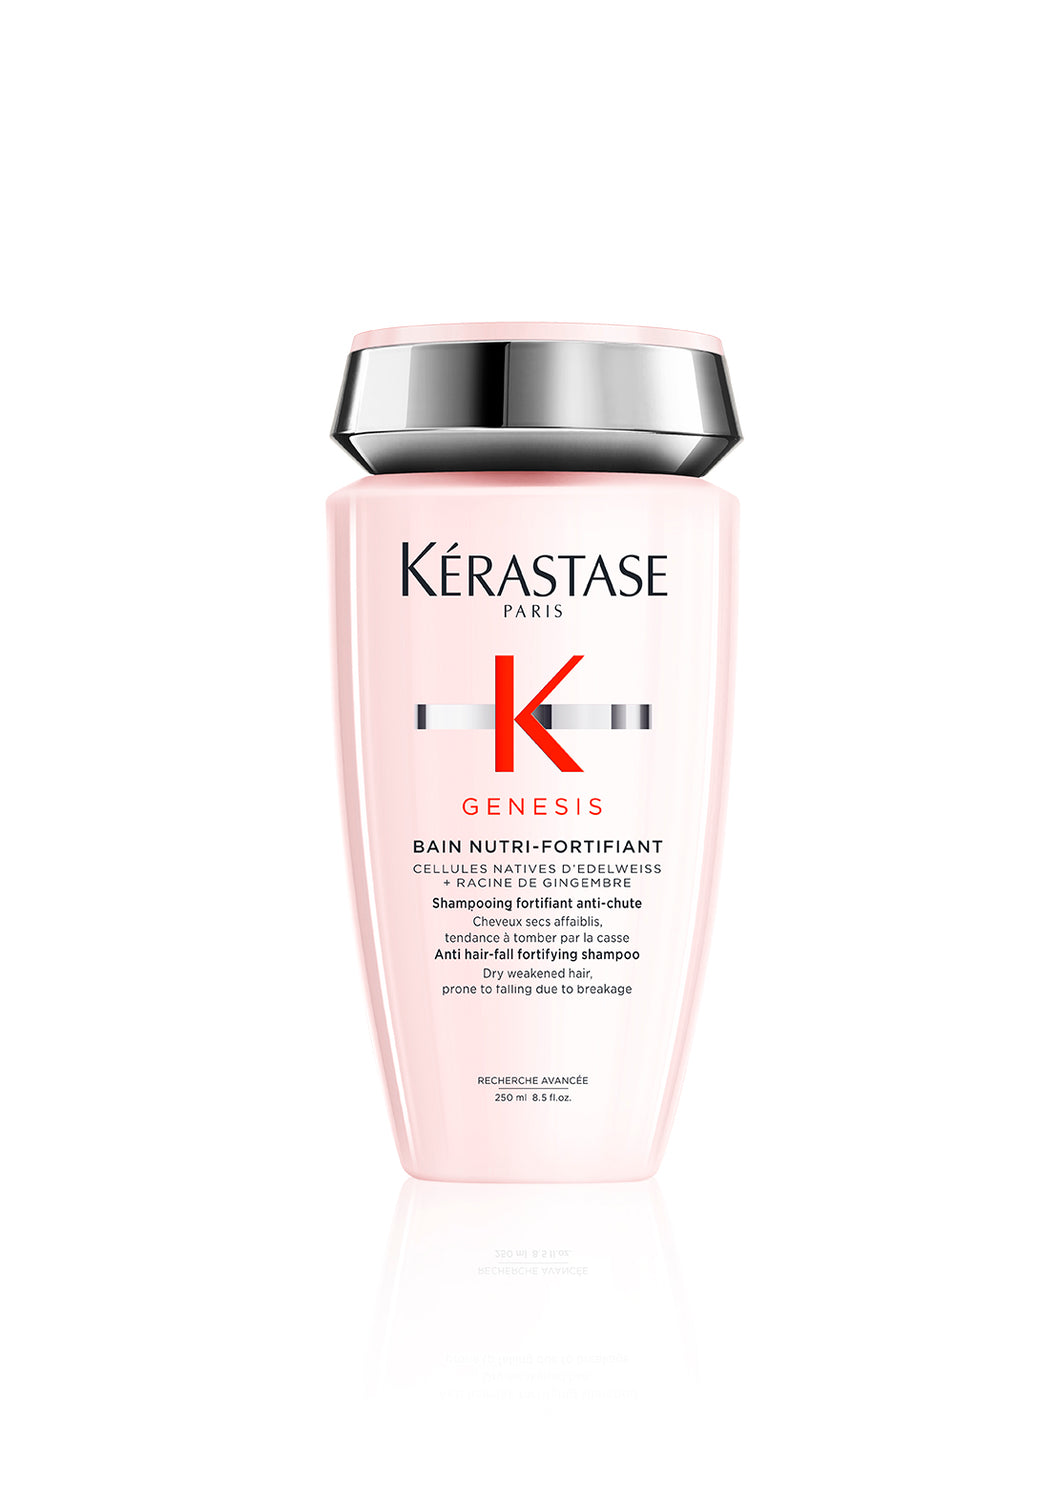 Kerastase Gensis Bain Nutri-Fortifiant anti-hair fall fortifying shampoo  250ml